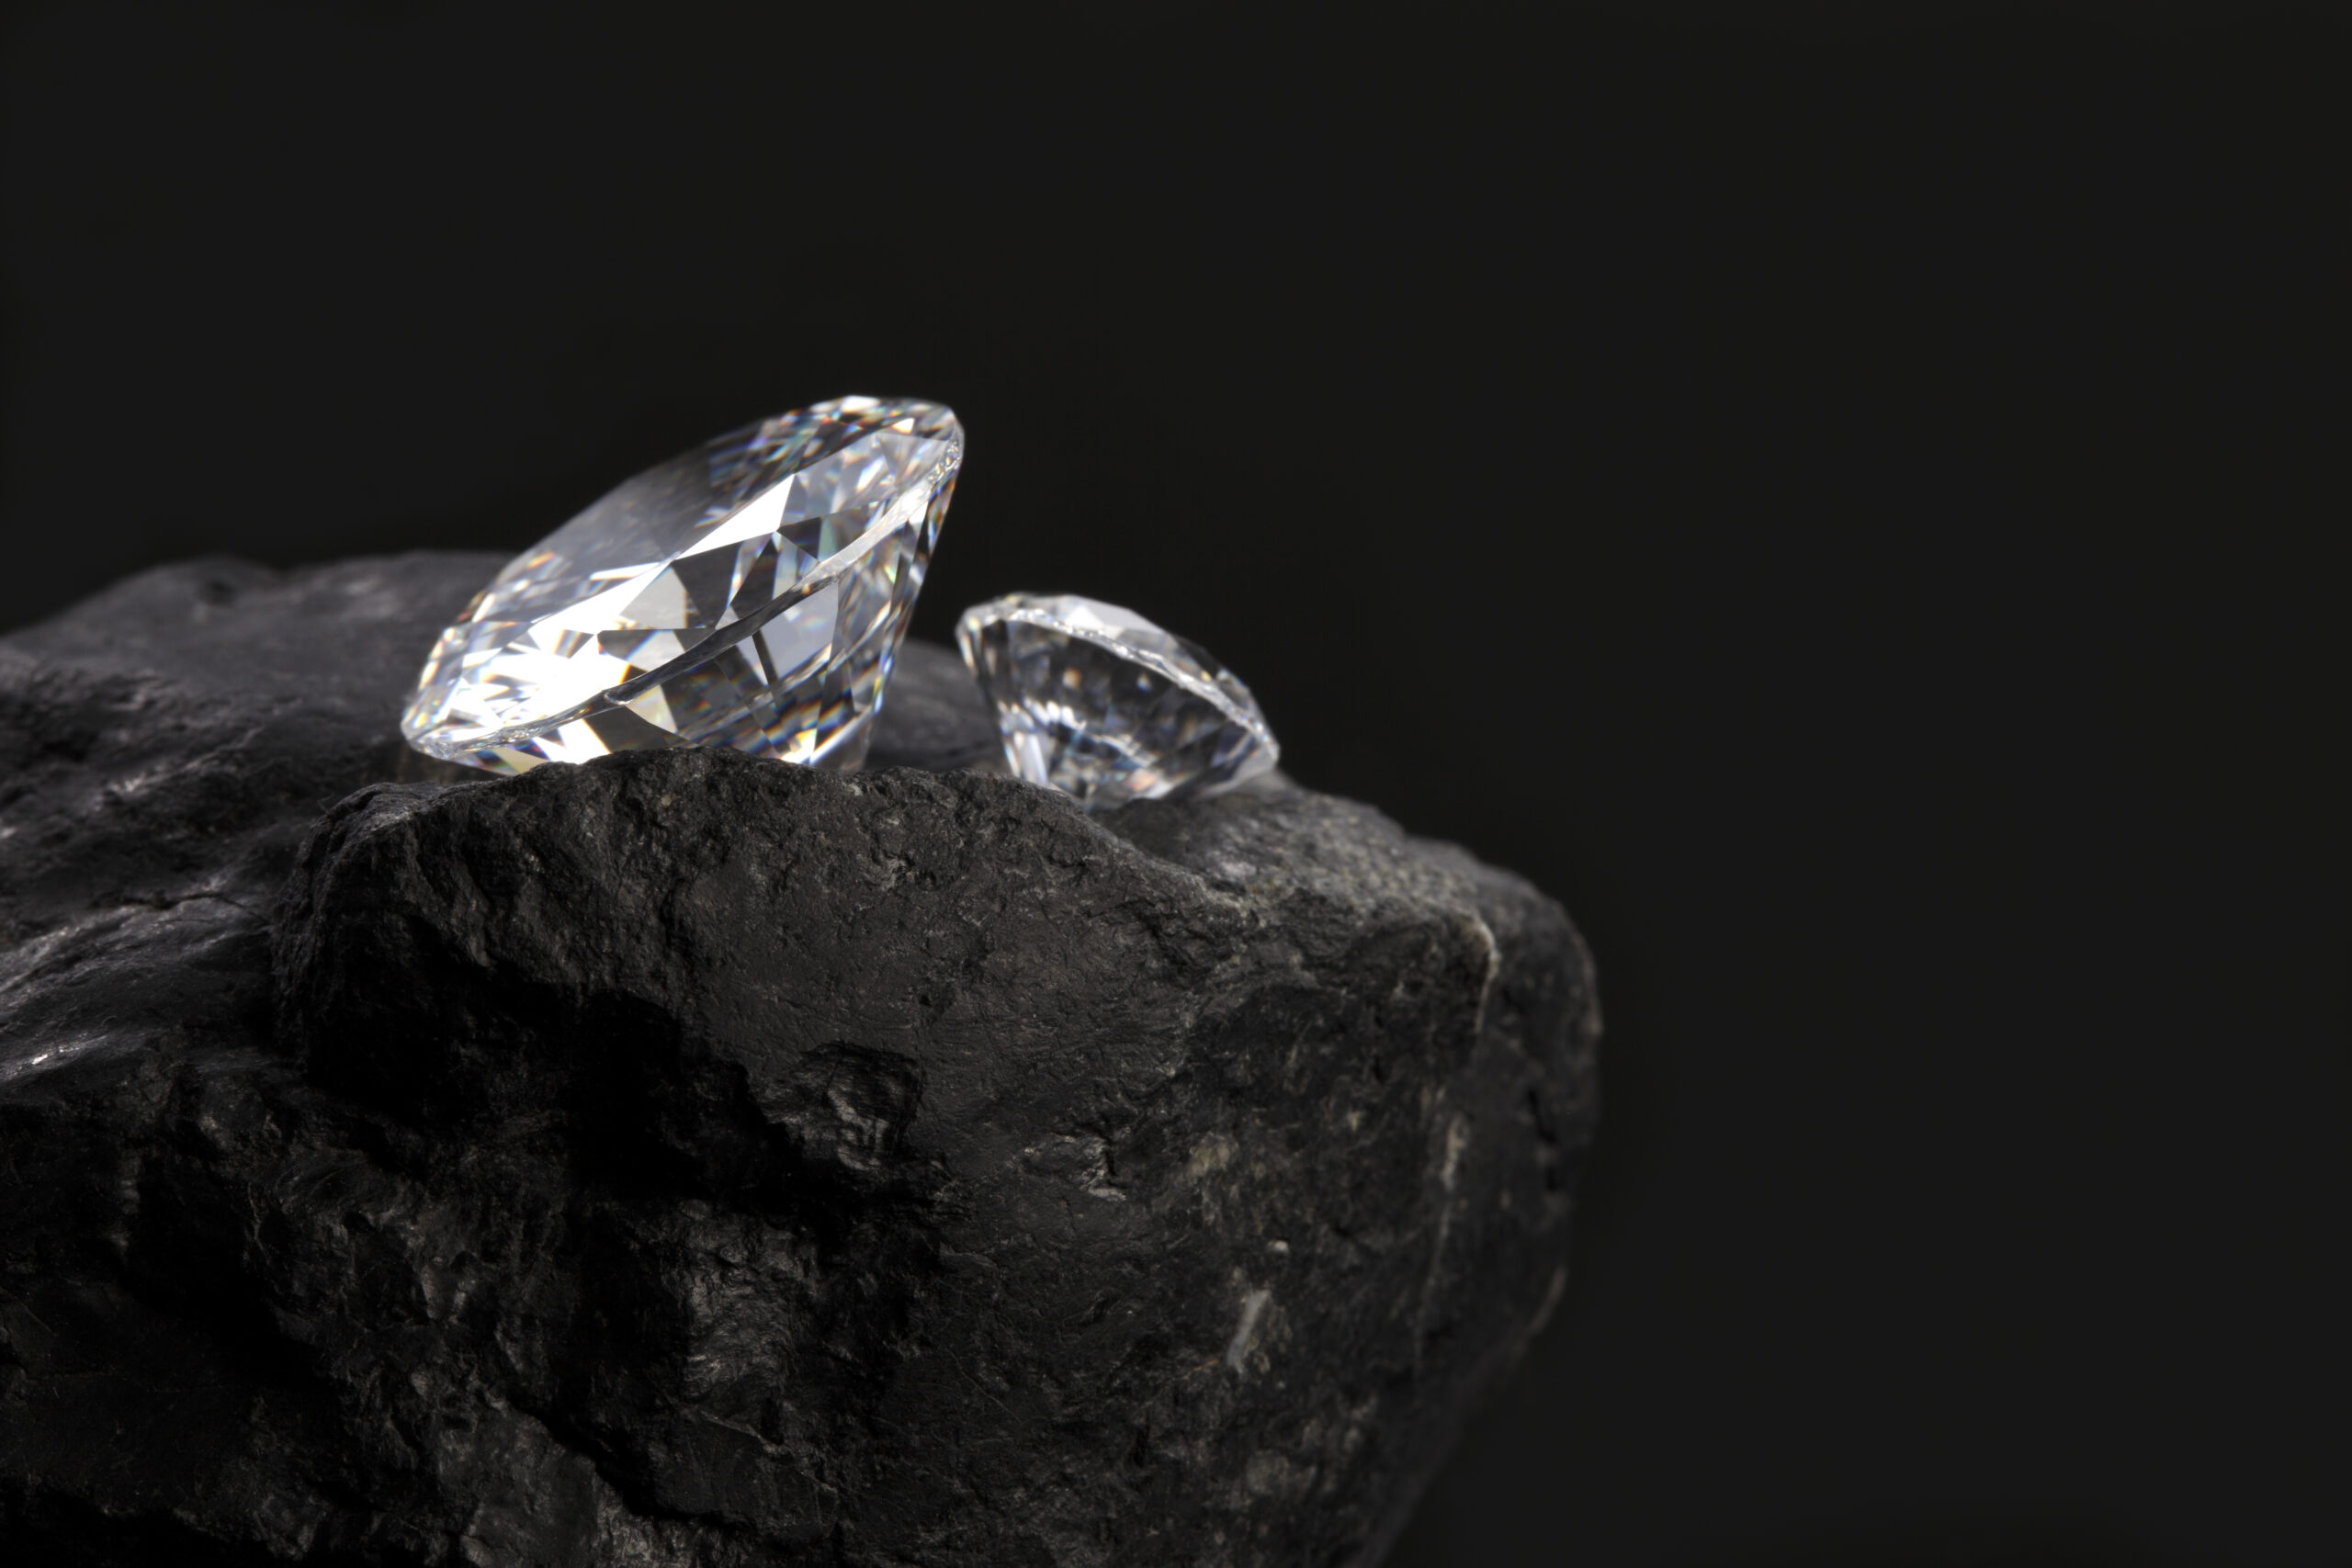 A decorative diamond on a rock in nature